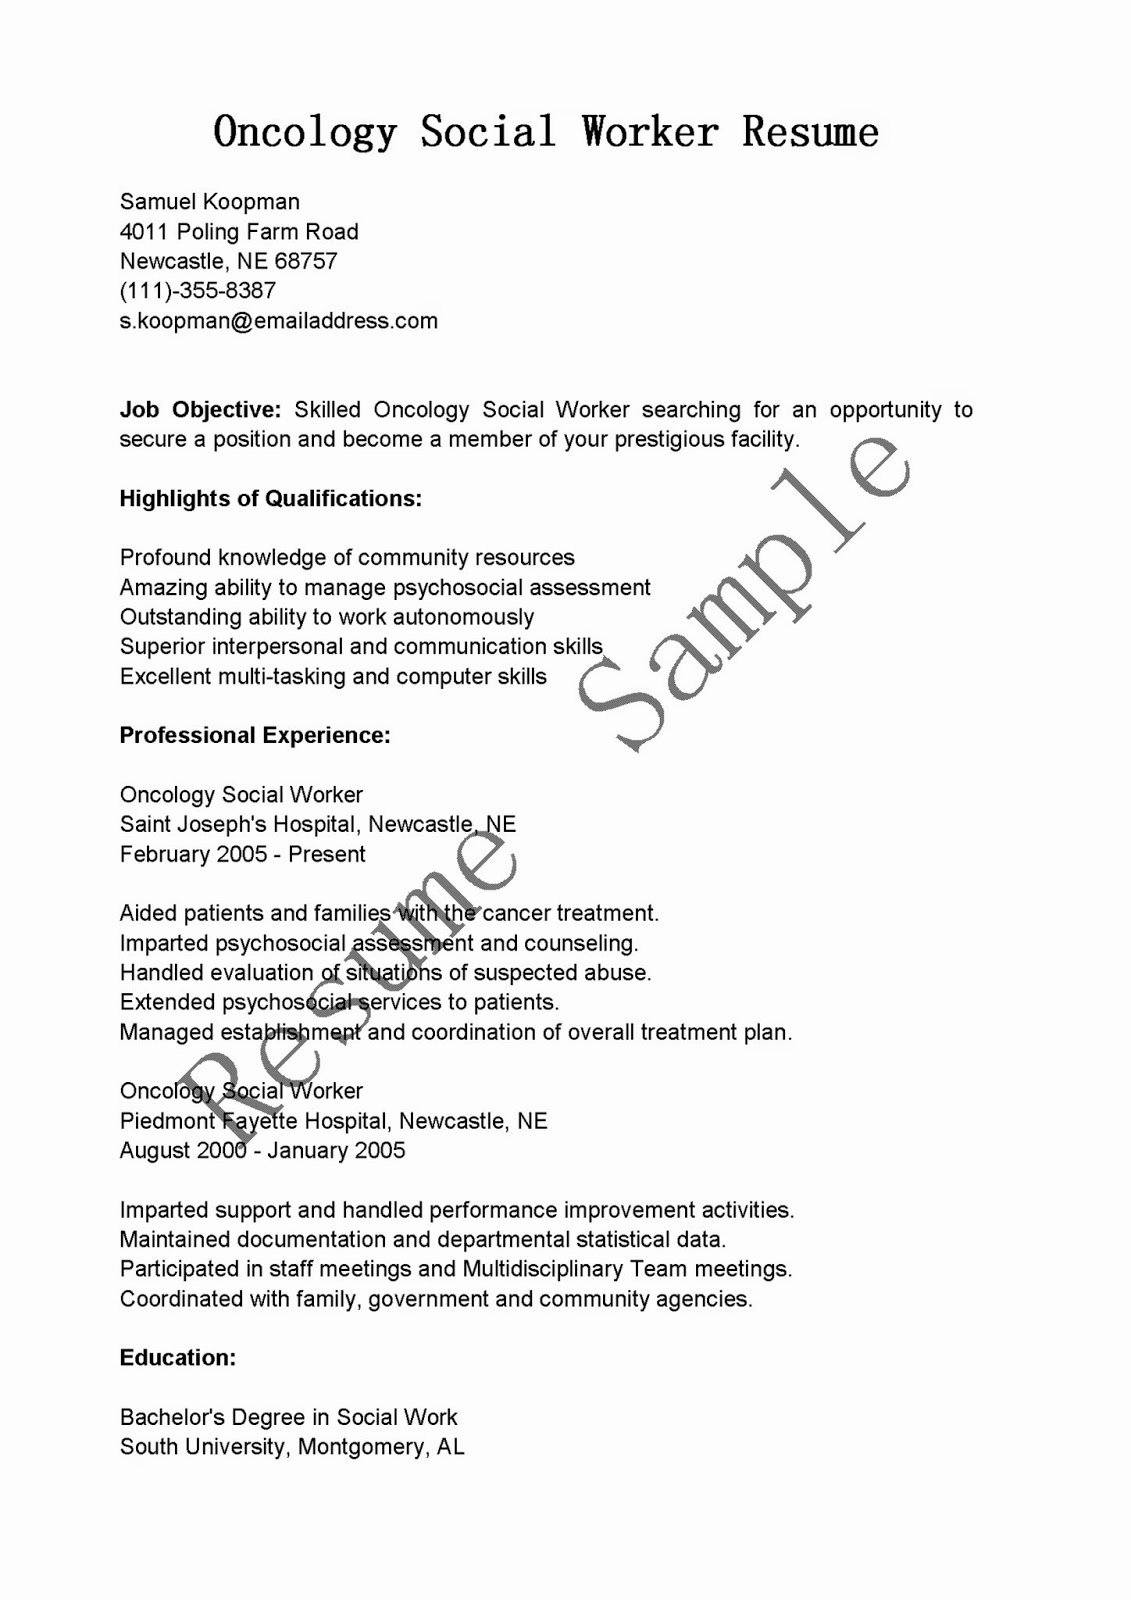 Resume Samples Cology social Worker Resume Sample